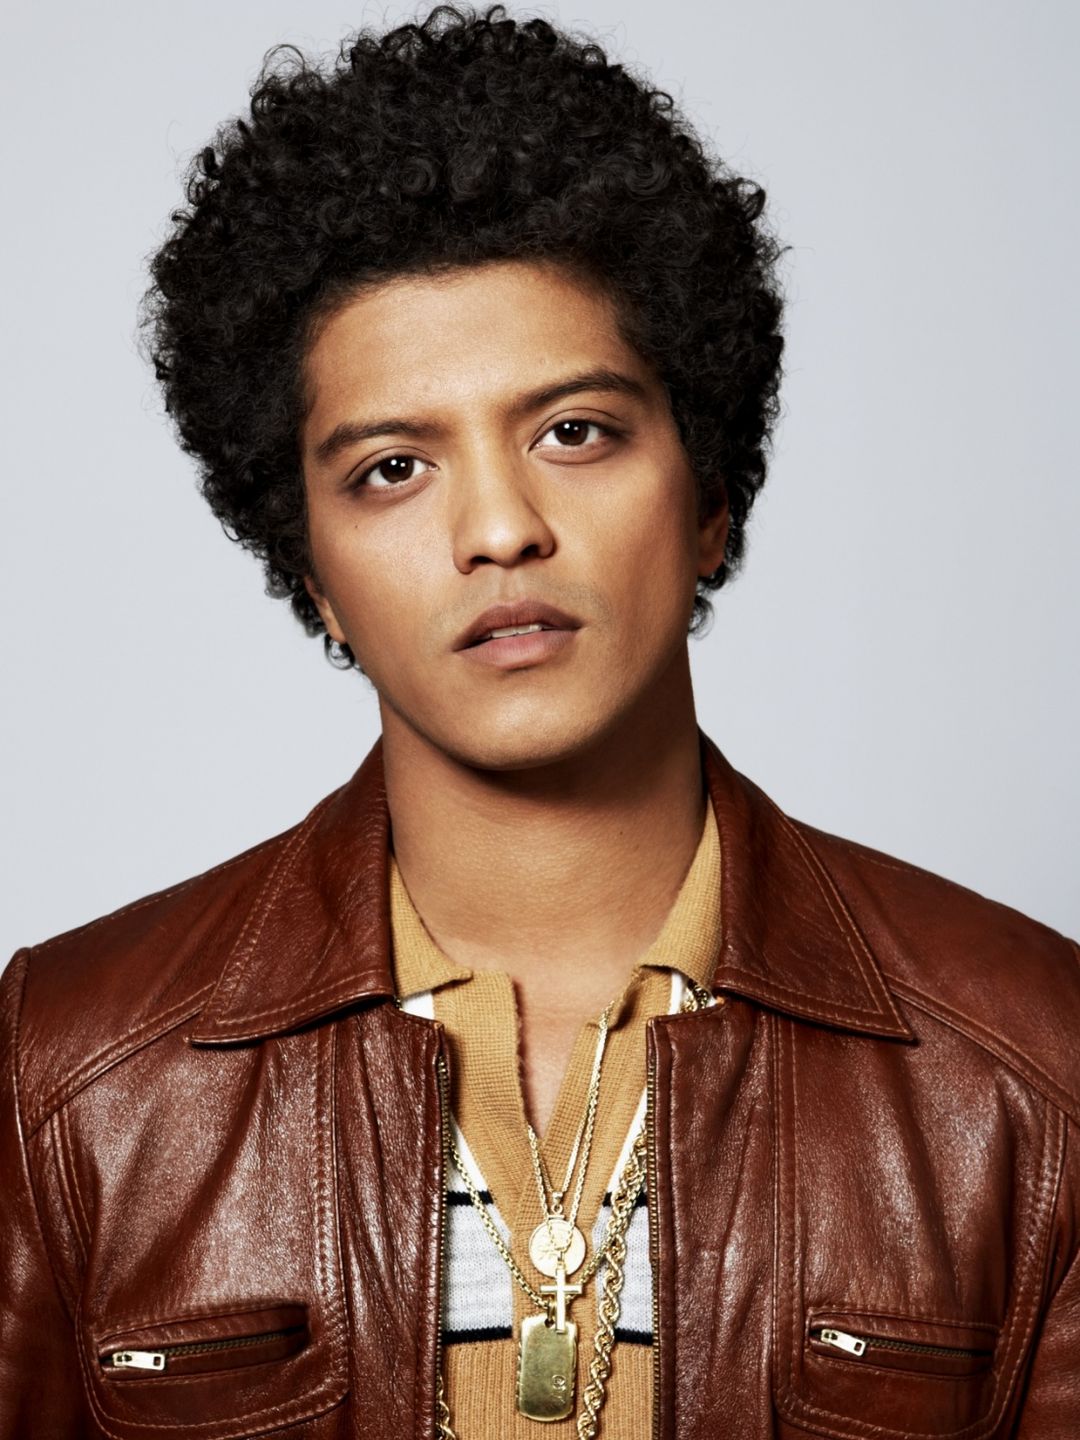 Bruno Mars ethnicity